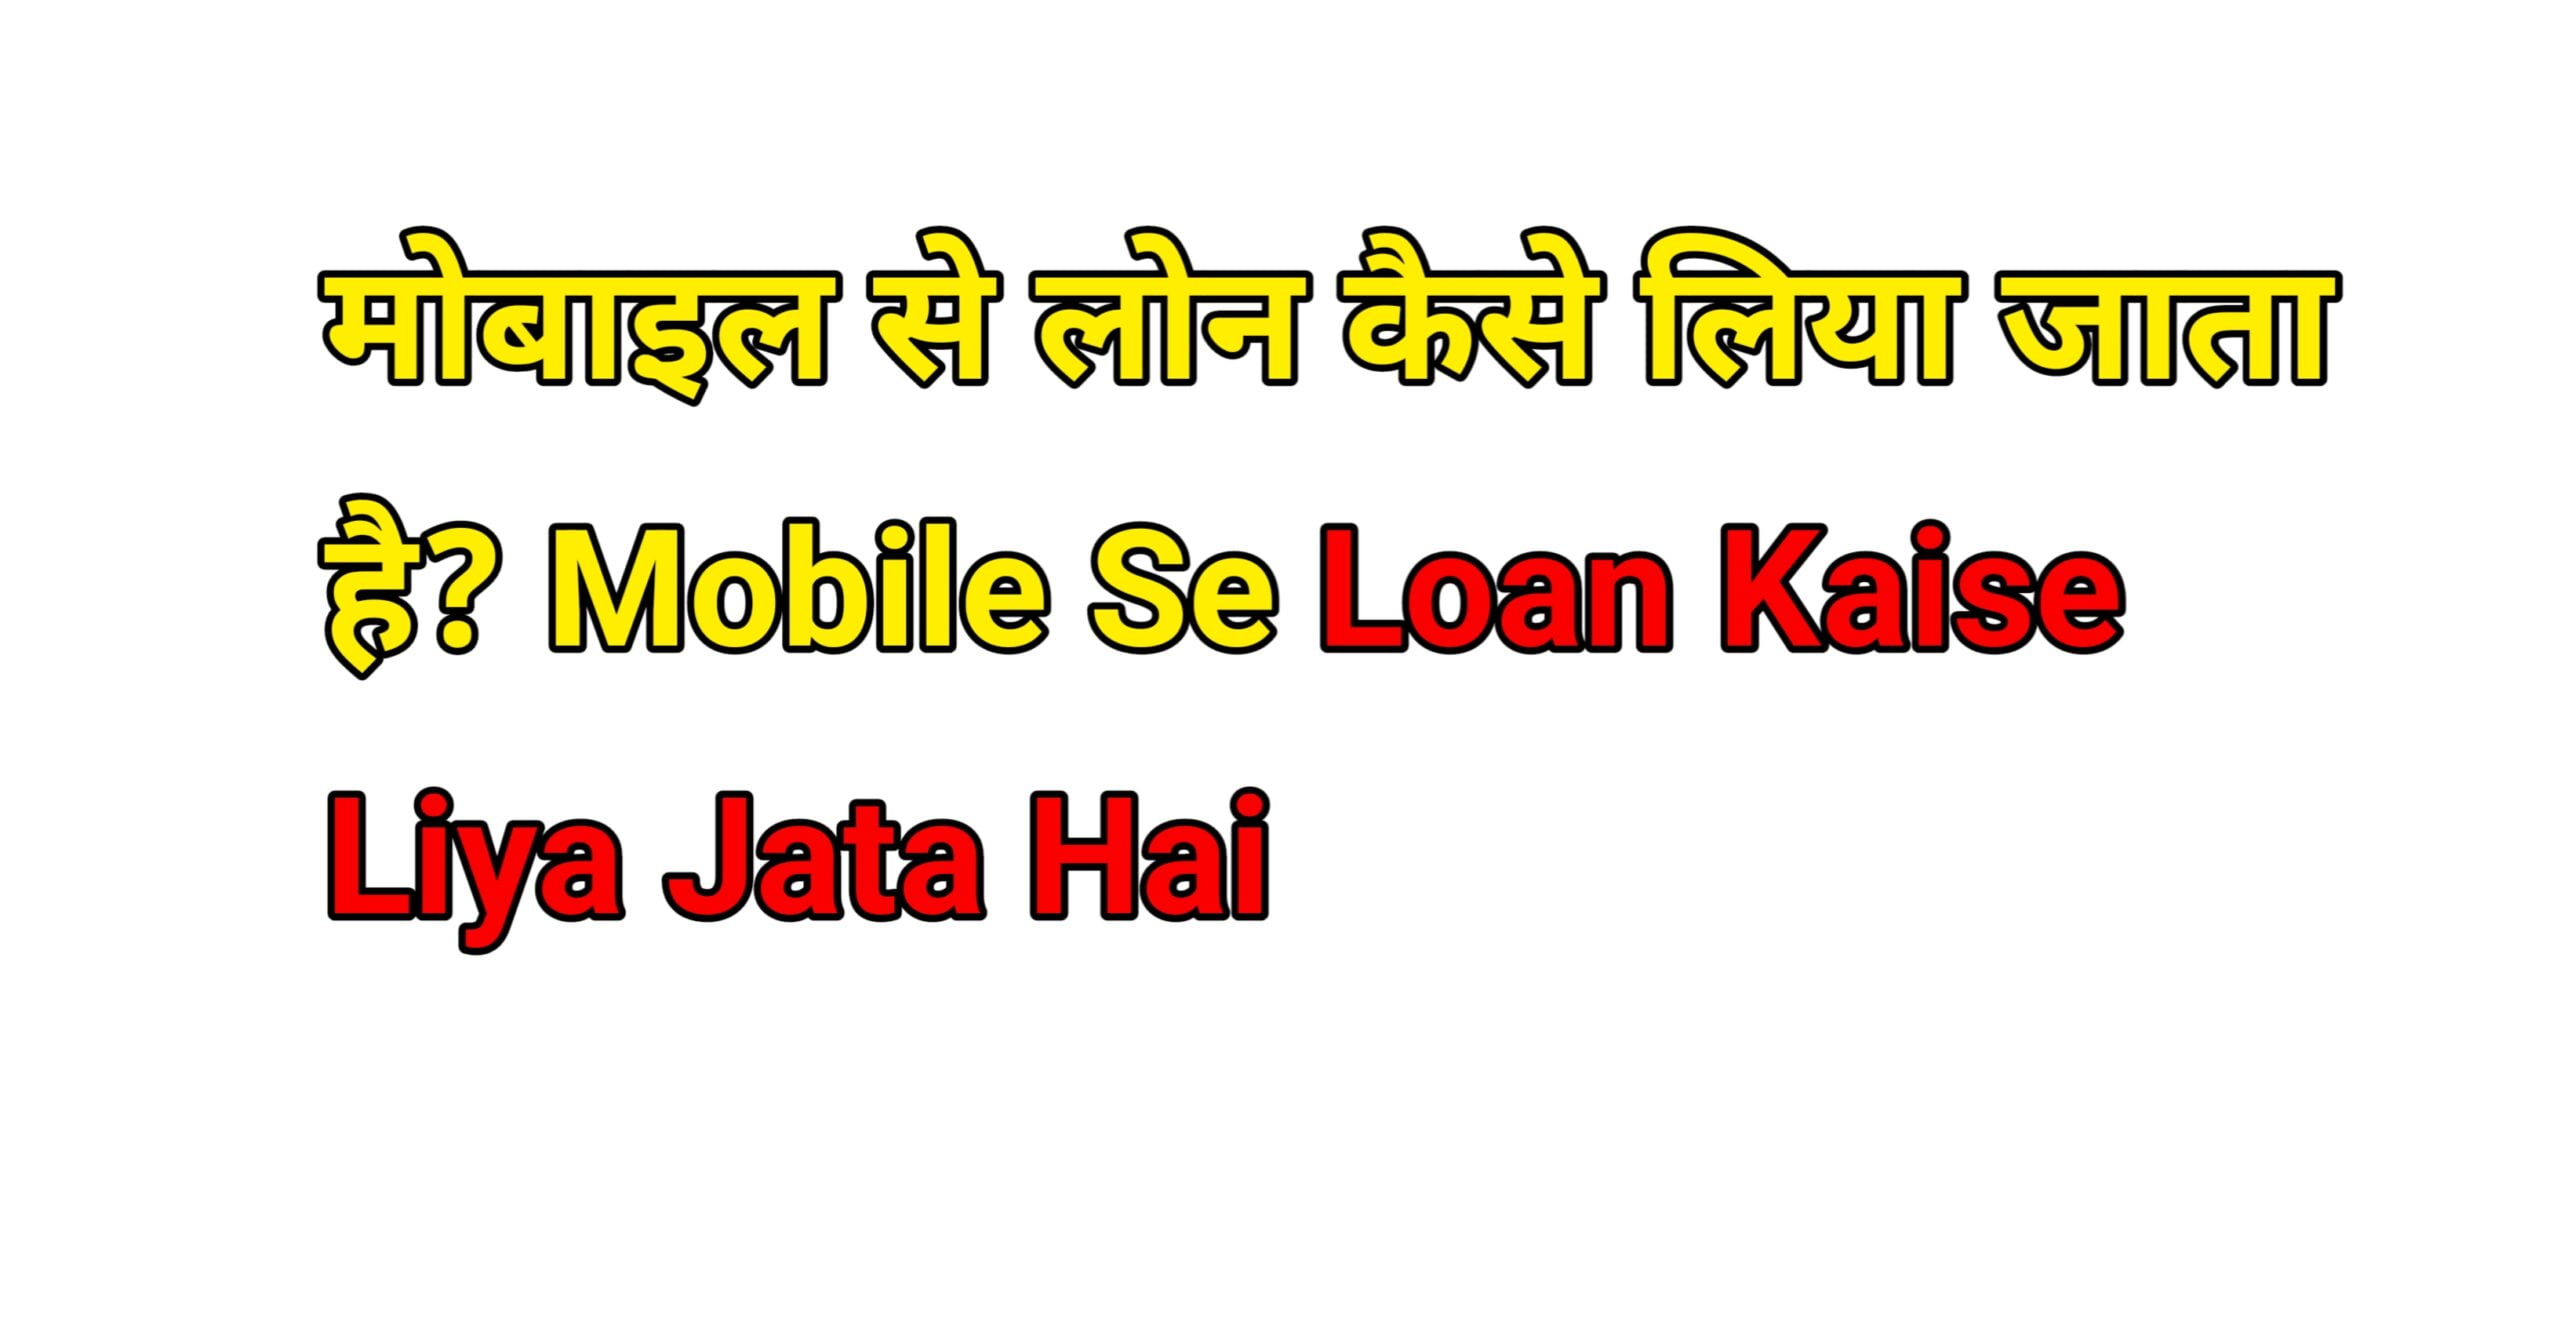 Mobile Se Loan Kaise Liya Jata Hai